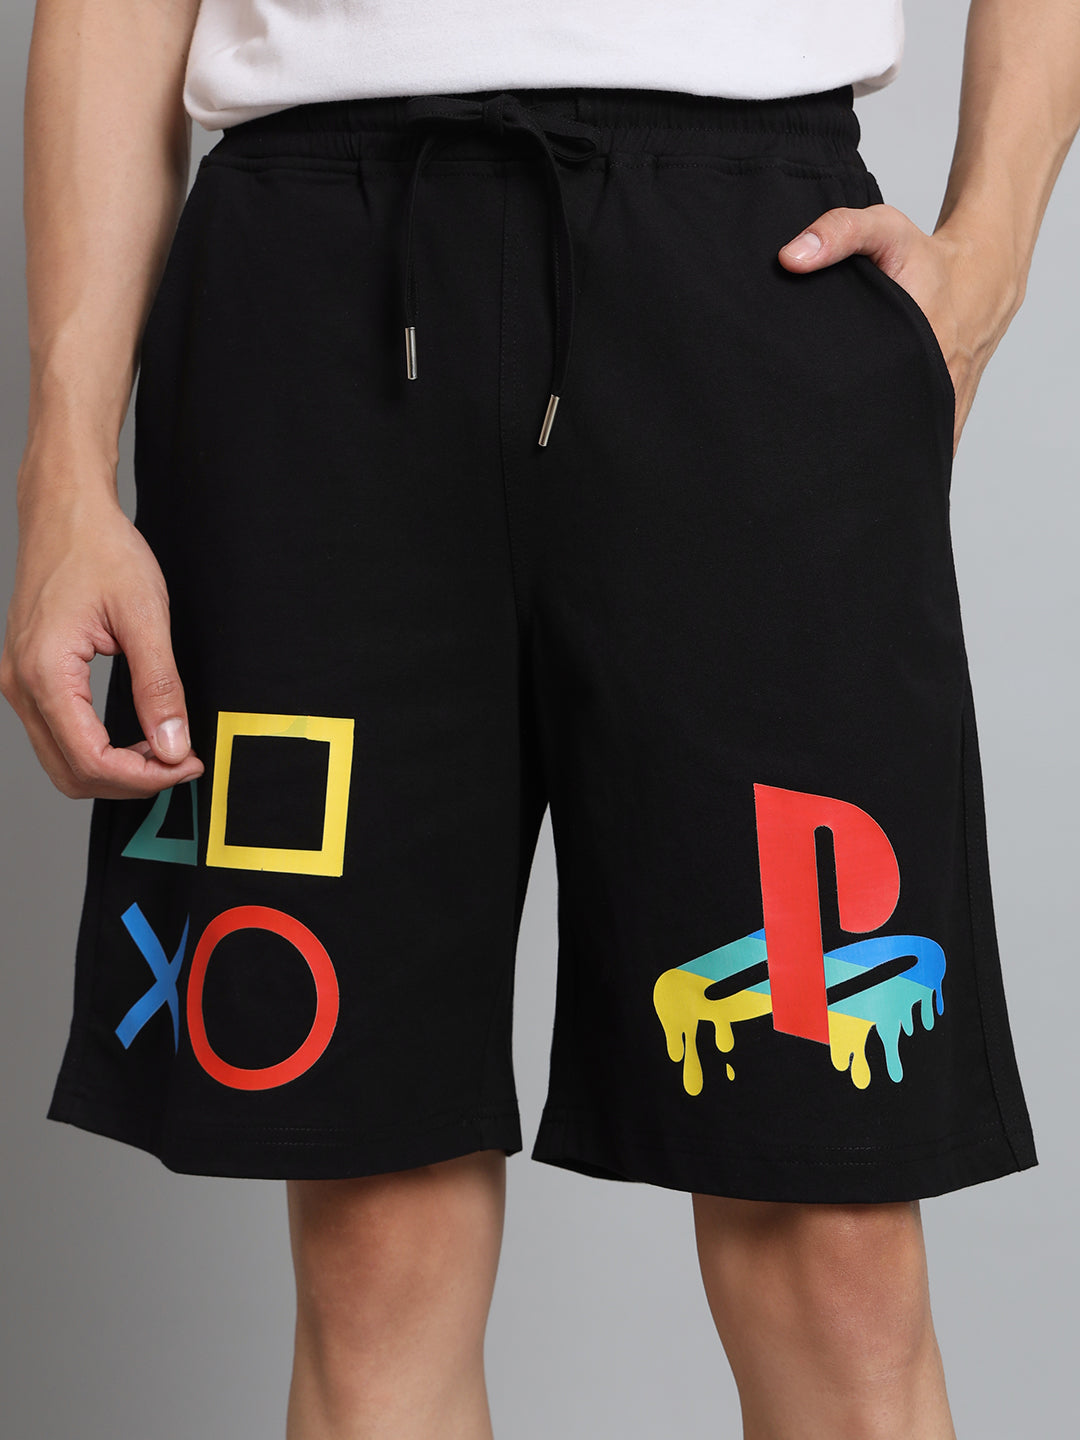 Playstation Regular Fit Shorts (Black) - Wearduds